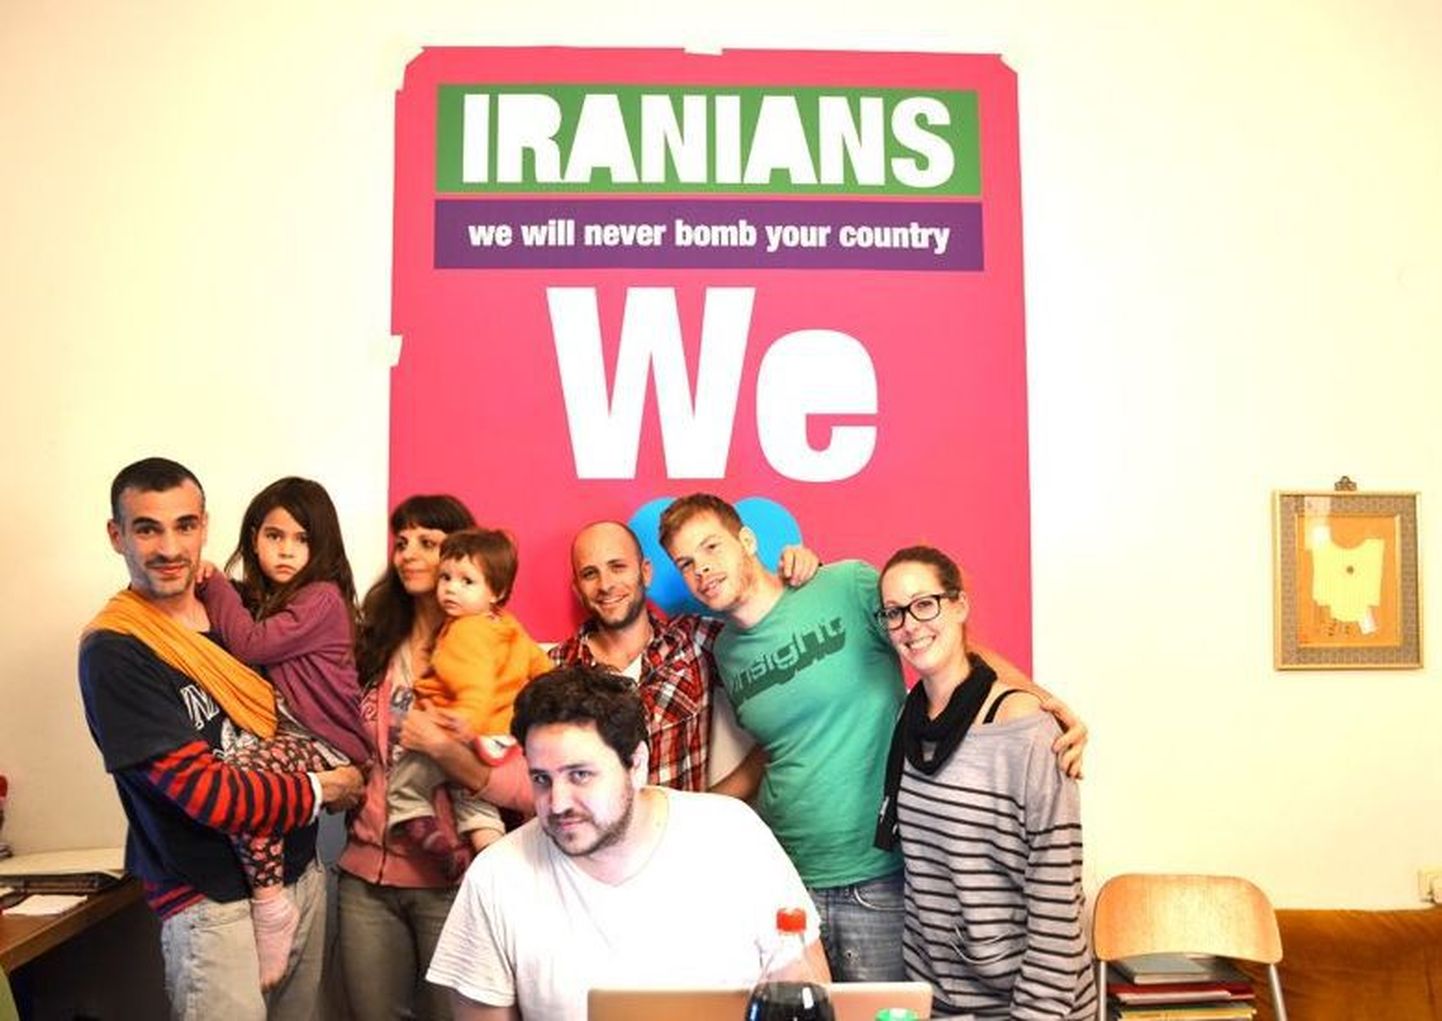 Iisraellased Facebookis: armastame iraanlasi